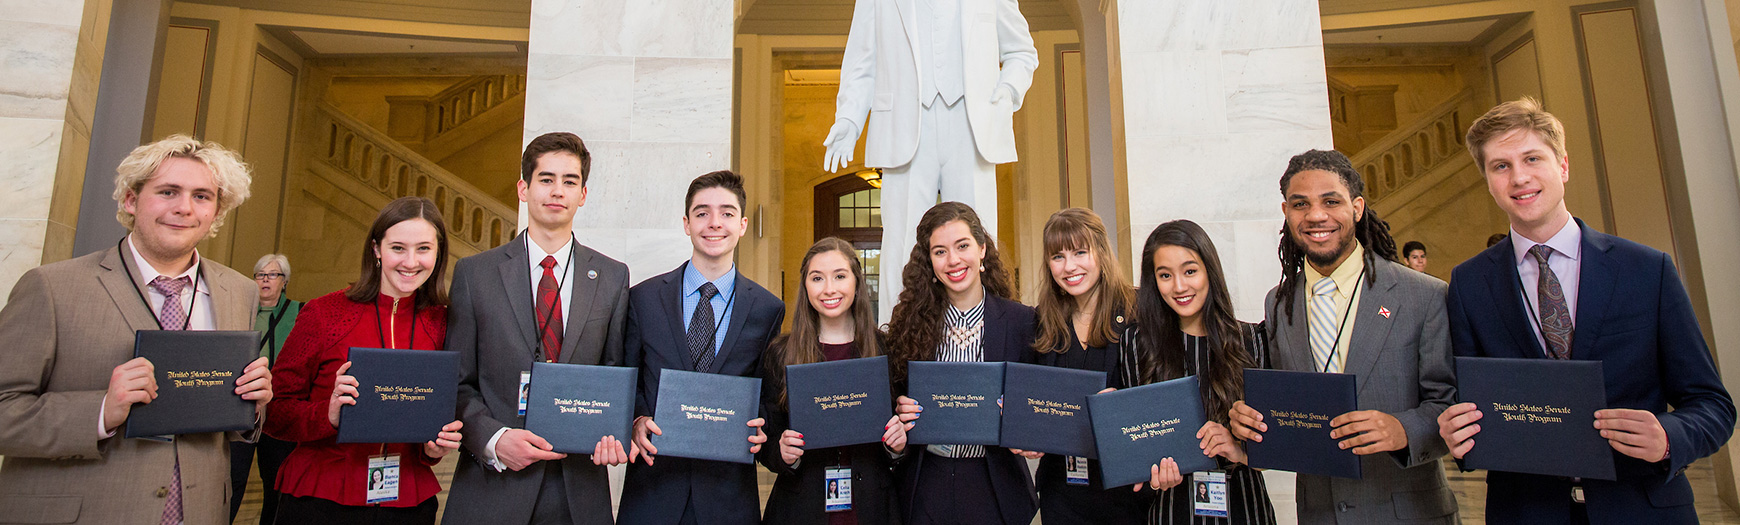 Senate Youth delegates with their certificates, Russell Rotunda, United States Senate, Washington, DC